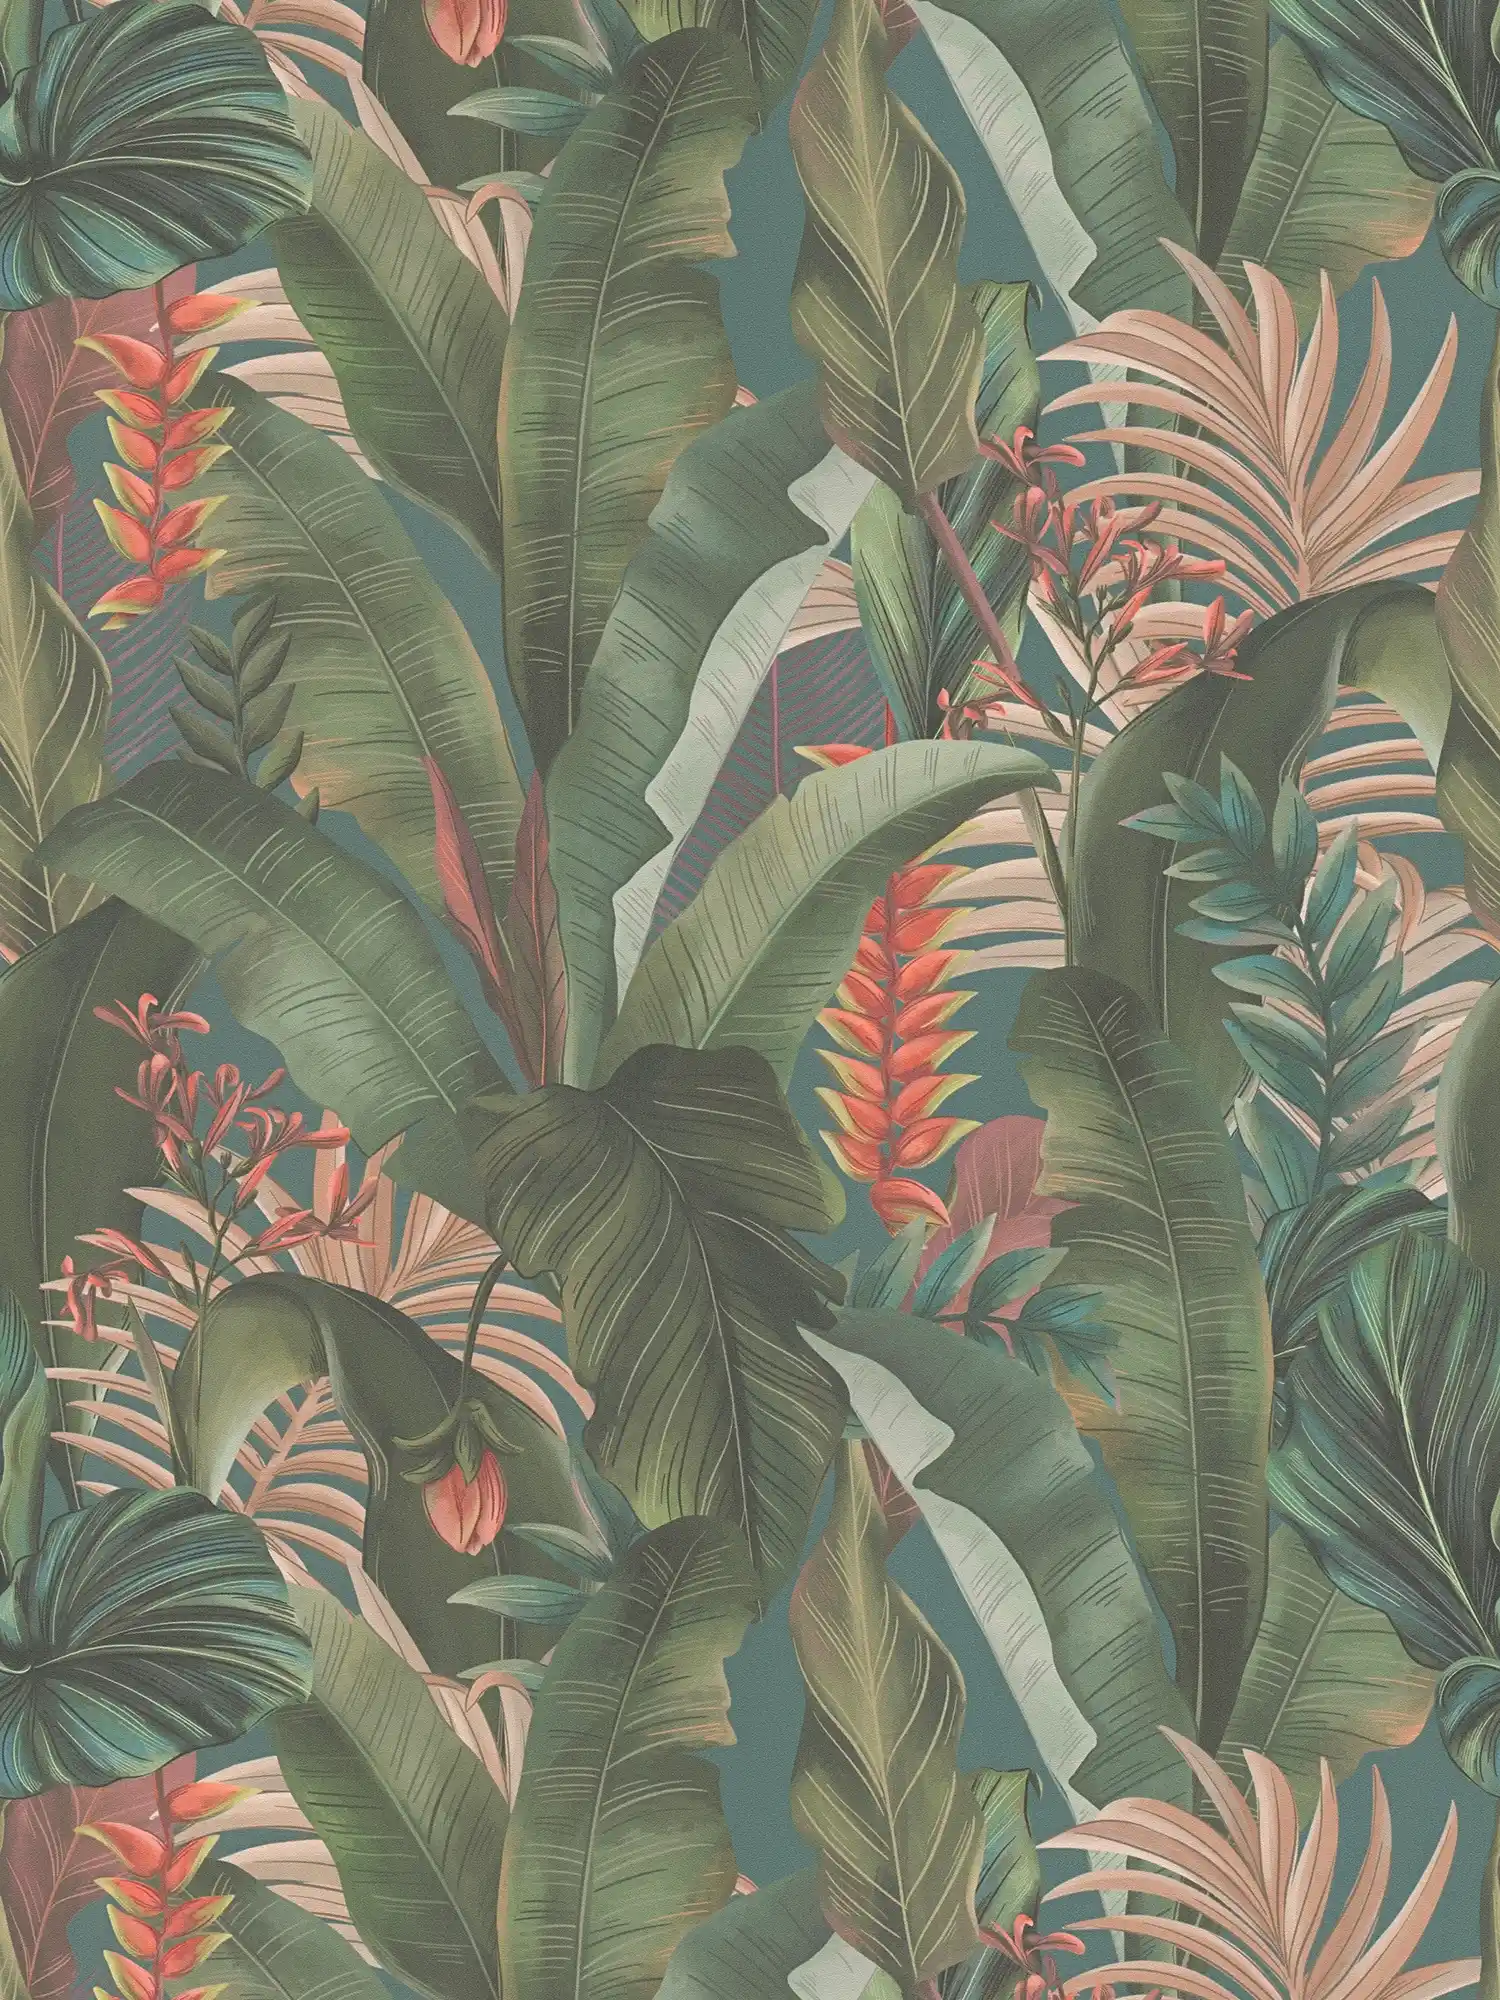 Jungle wallpaper floral with palm leaves & flowers textured matt - blue, petrol, green
